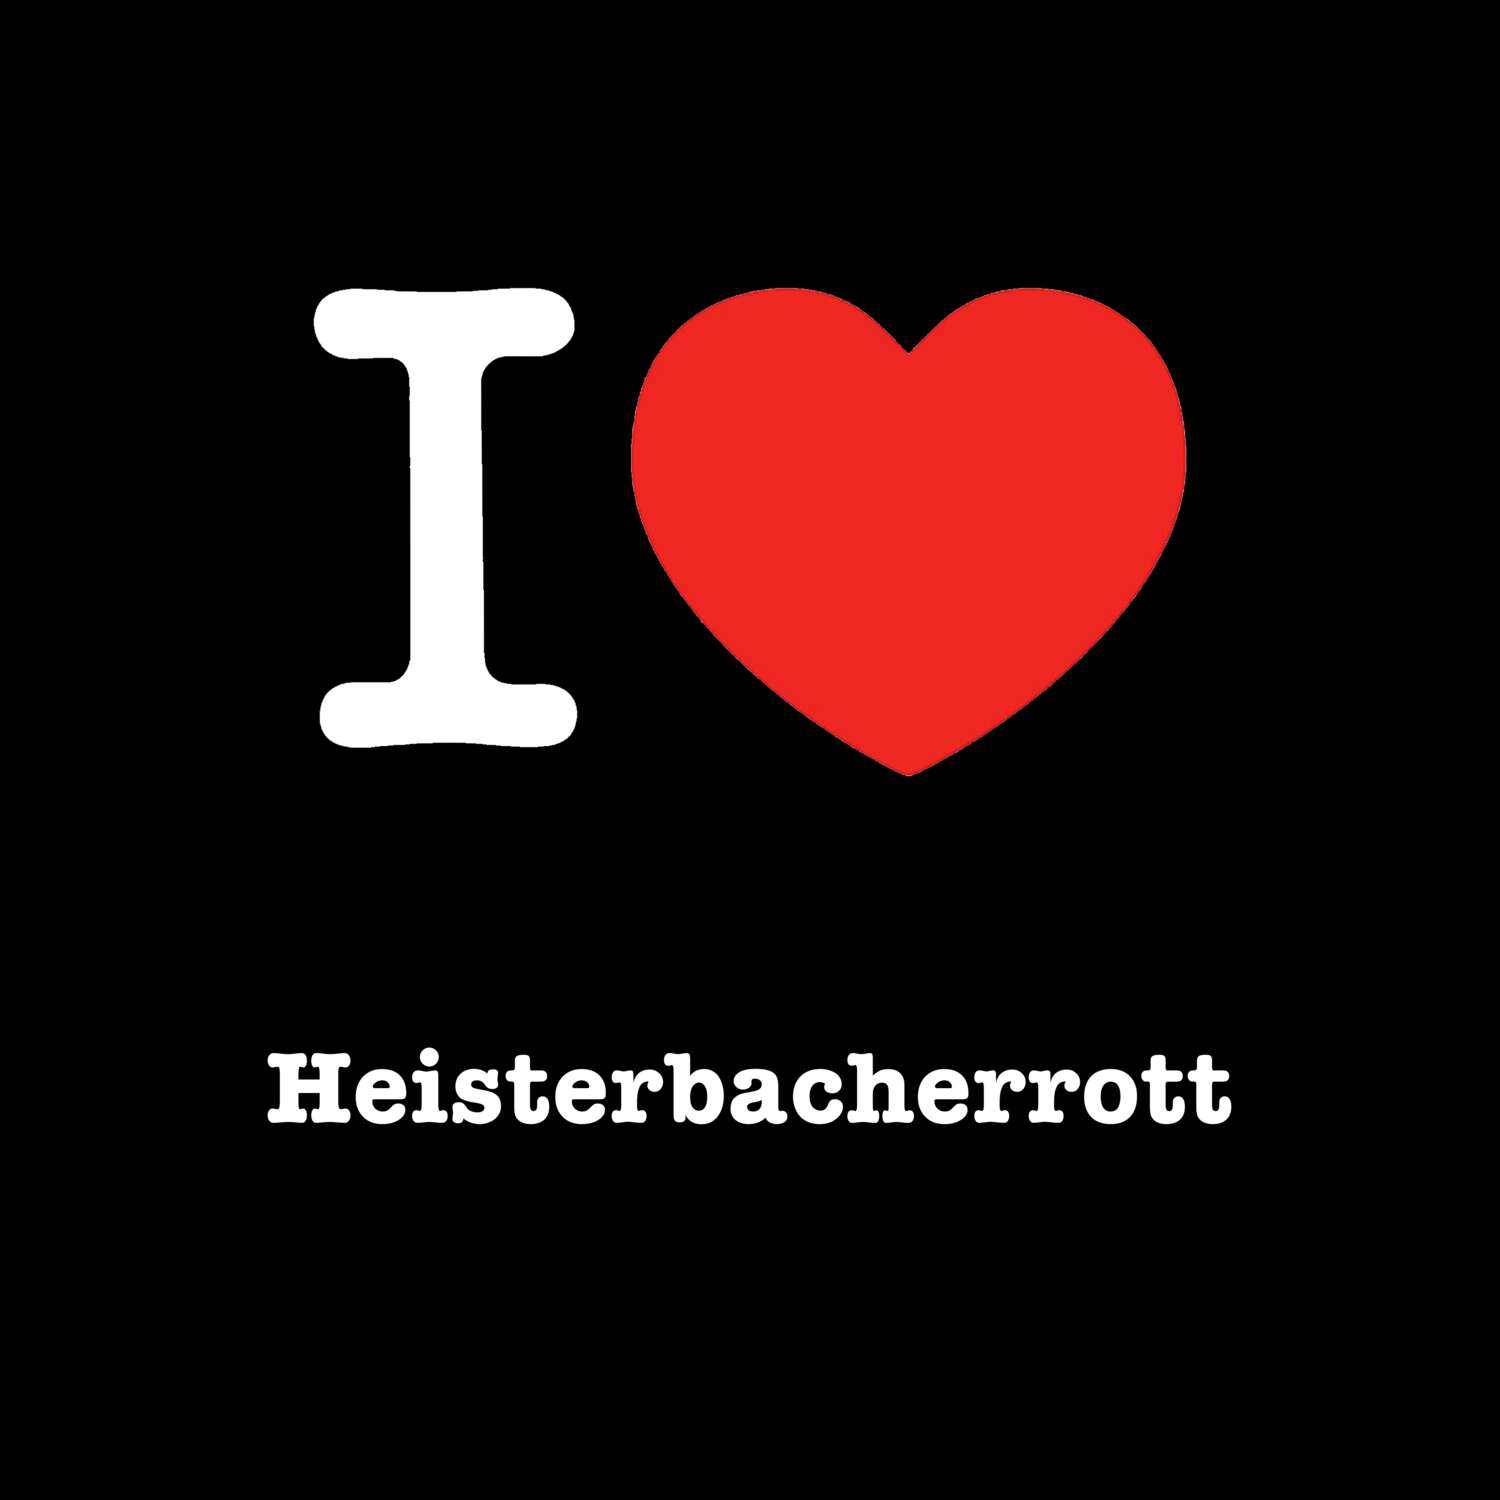 Heisterbacherrott T-Shirt »I love«